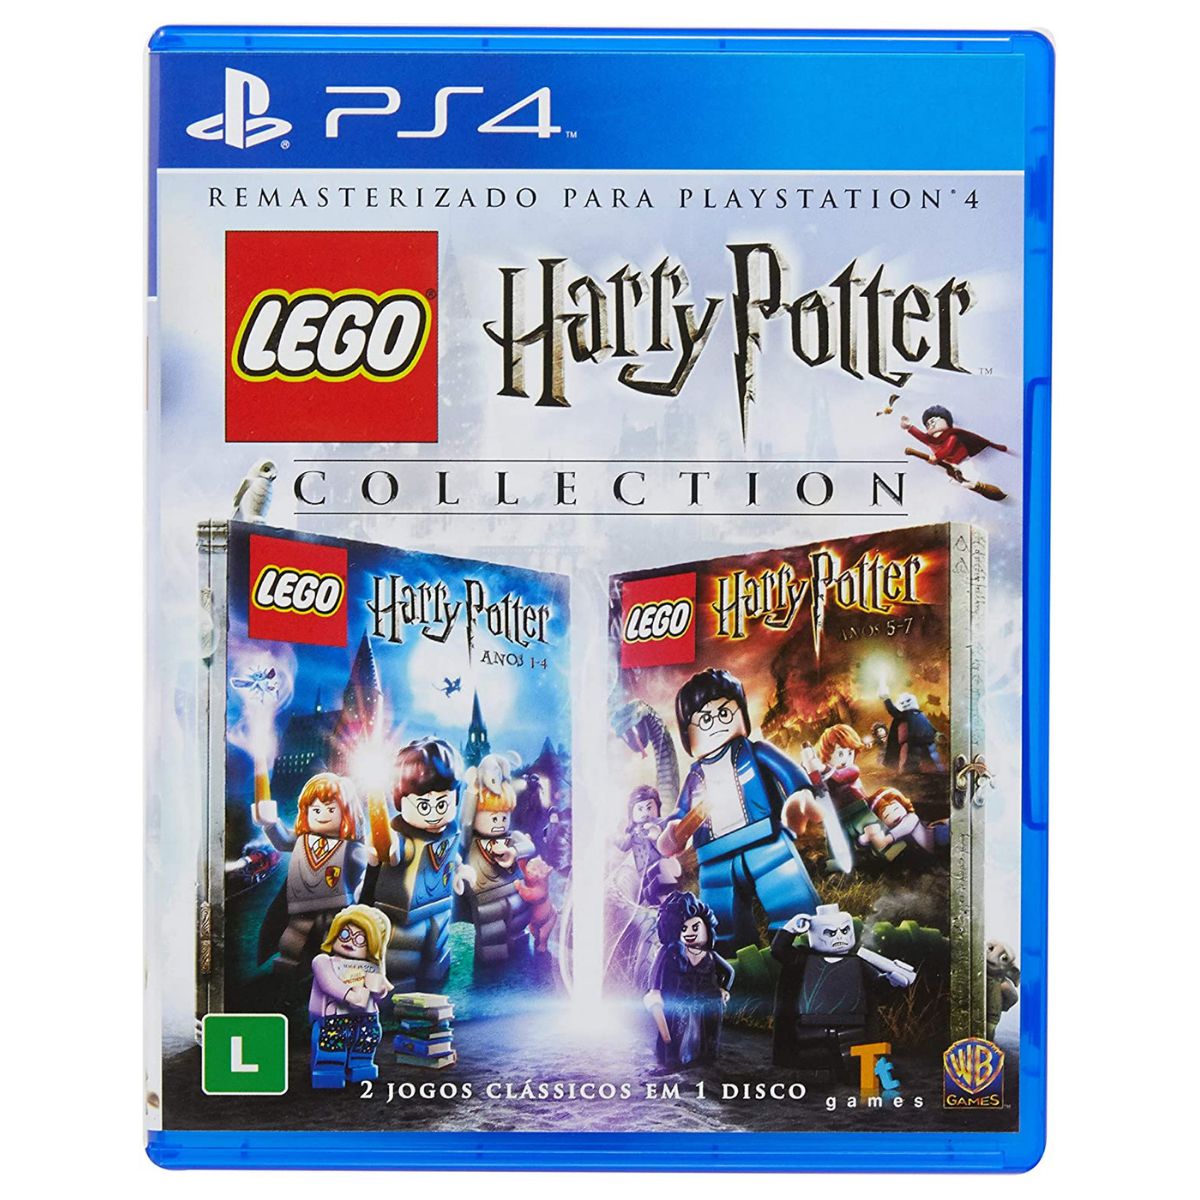 Lego Harry Potter Years 1-4 - Xbox 360 - Game Games - Loja de Games Online